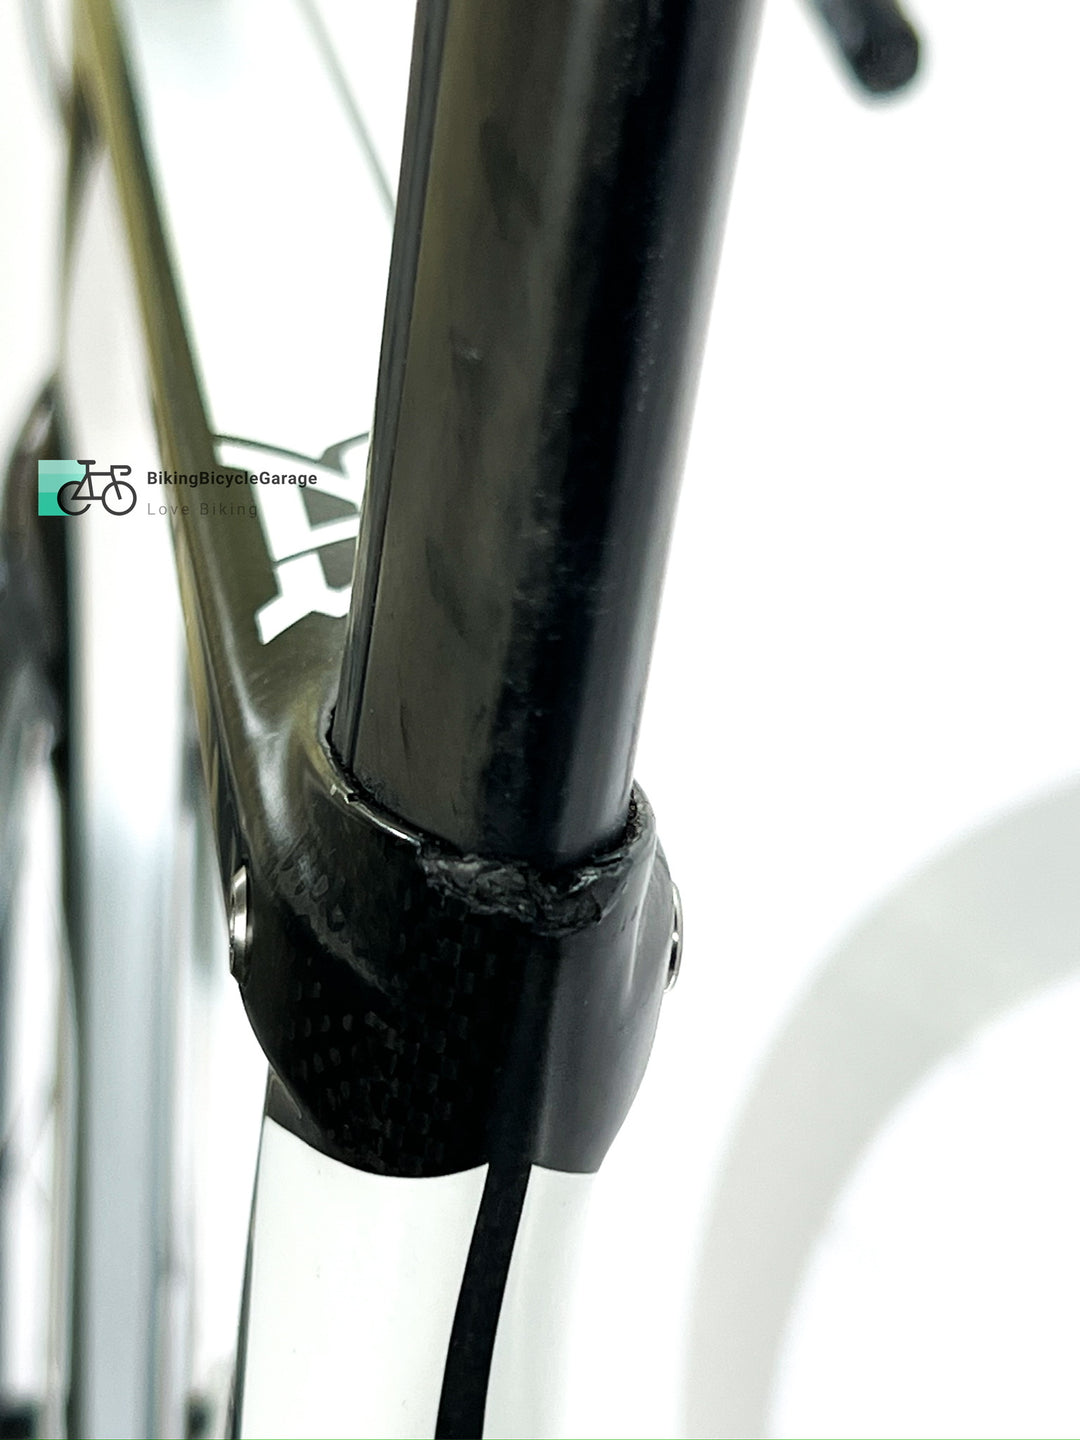 Felt AR3 Shimano Ultegra 11-Speed, Carbon Fiber Aero Road Bike-2015, 61cm